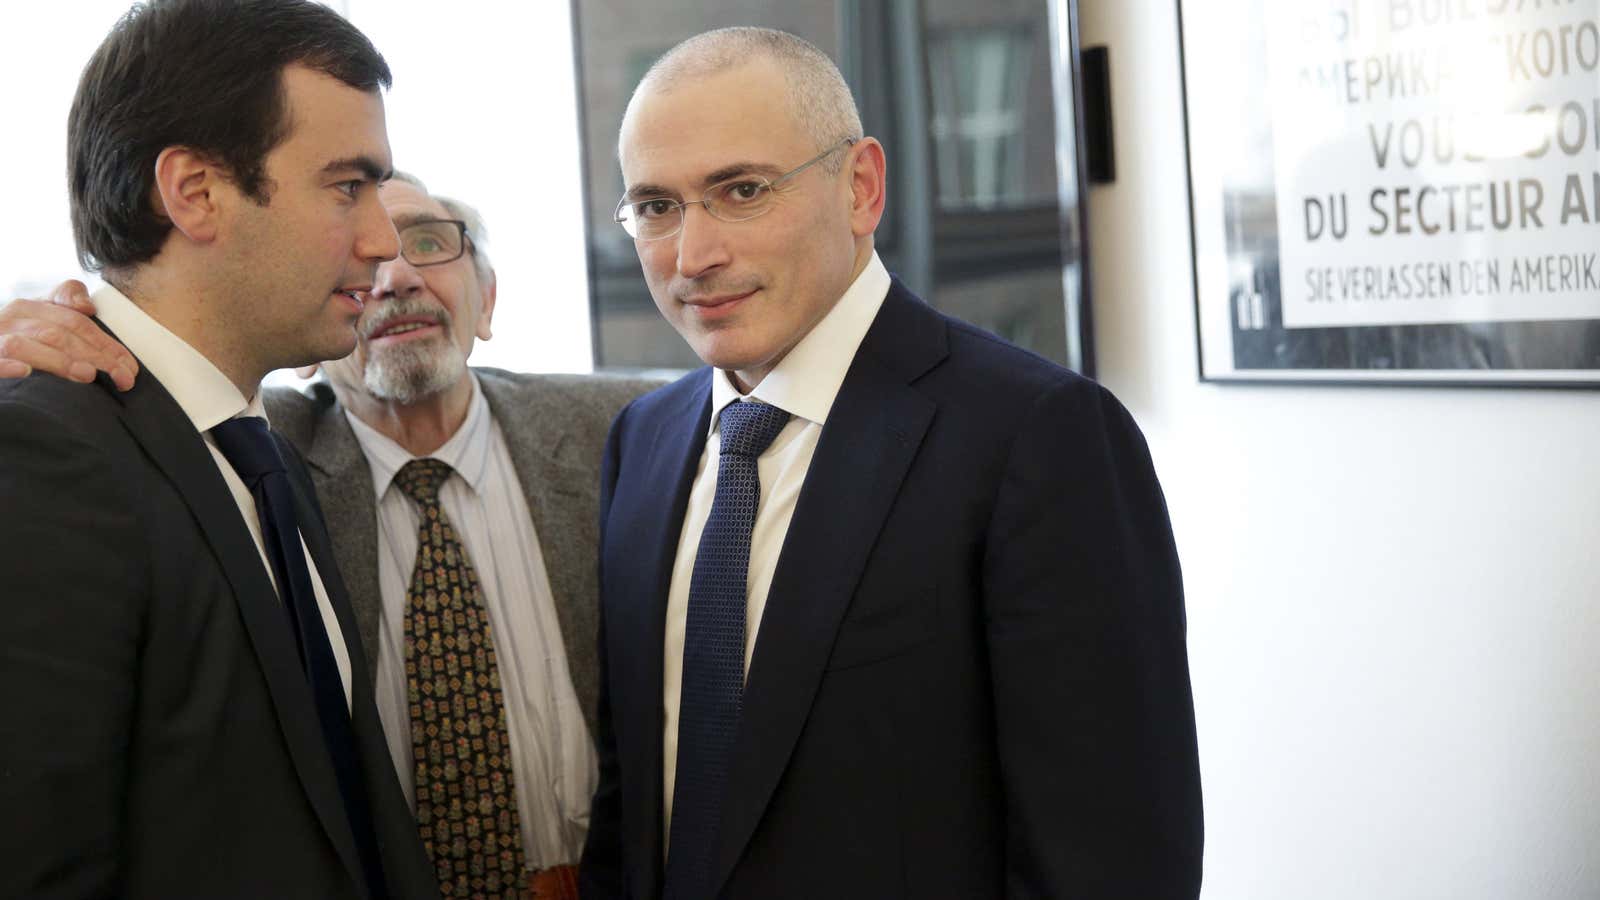 Khodorkovsky with father Boris and son Pavel.